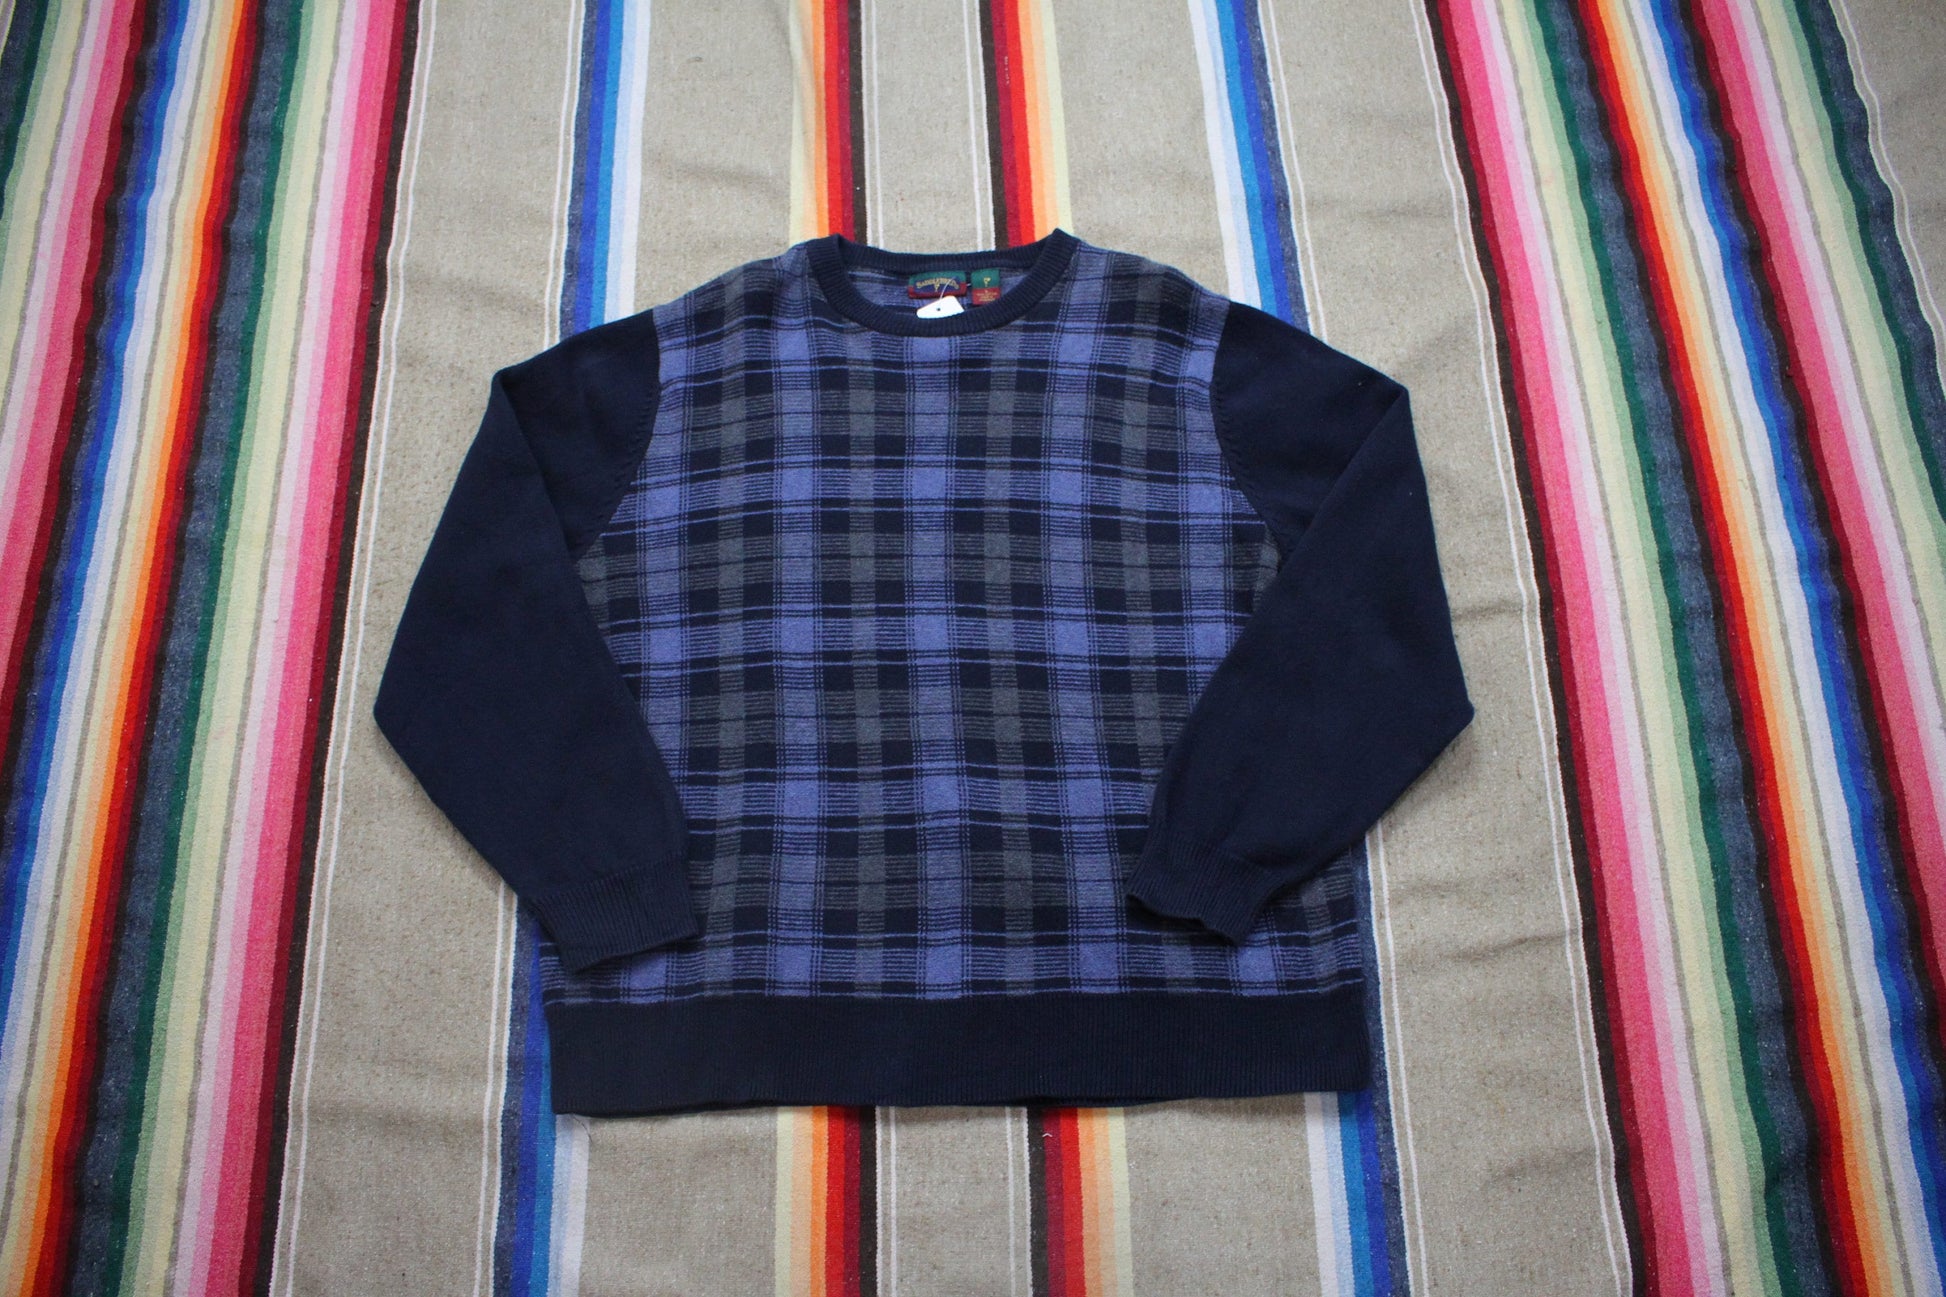 1990s Saddlebred Cotton Knit Sweater Size XL